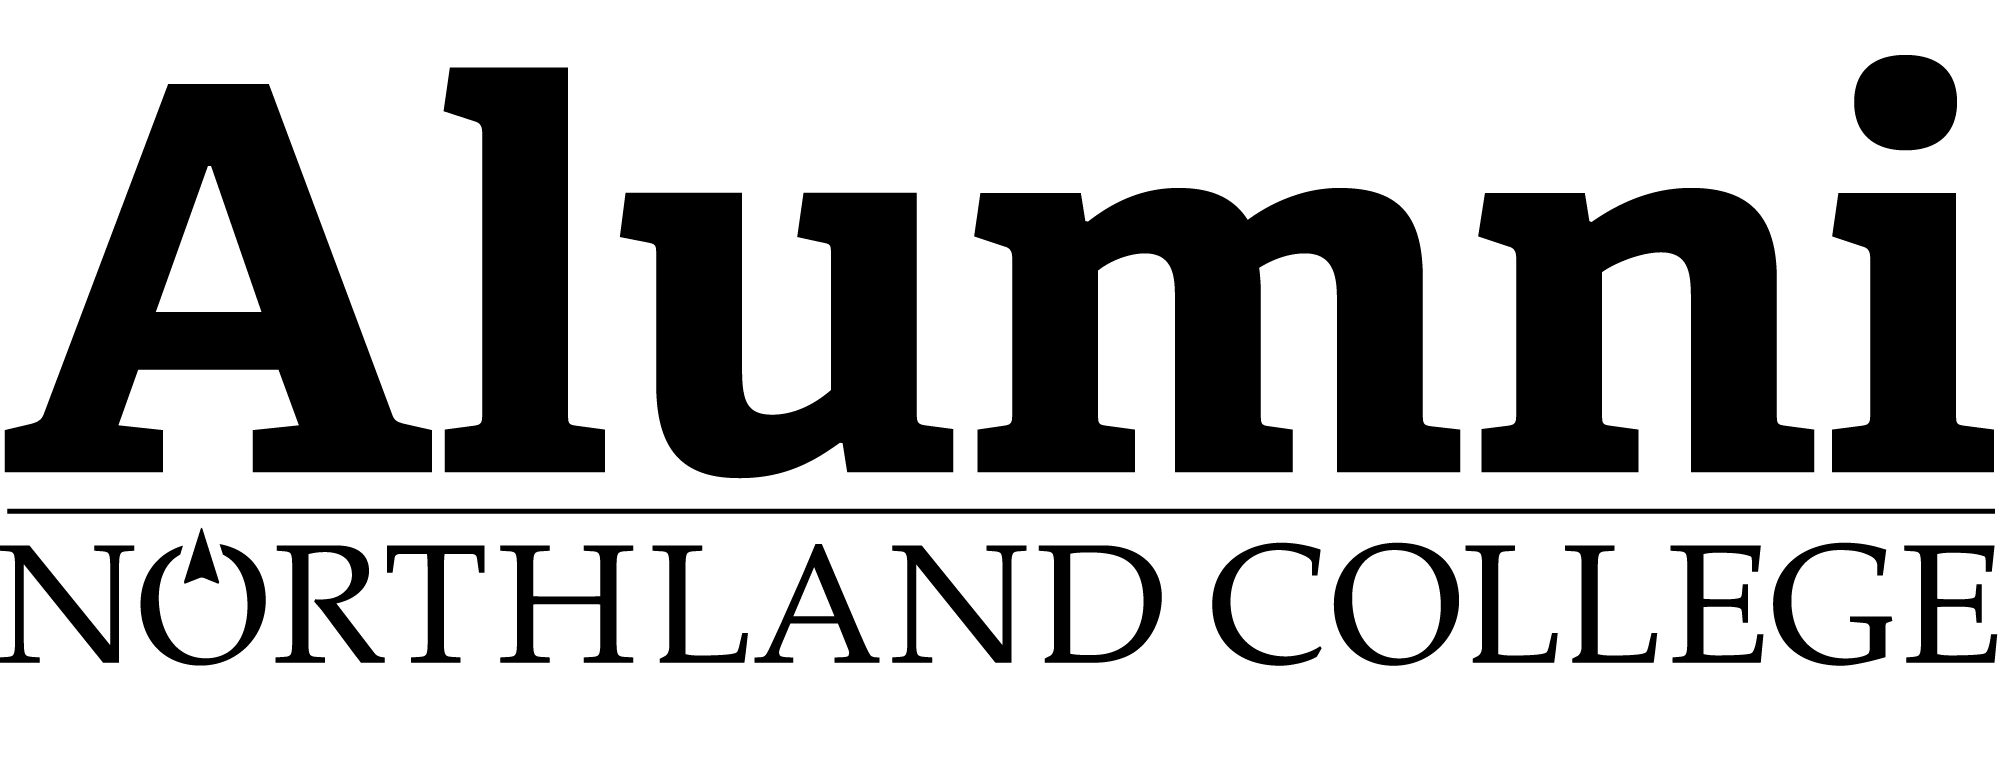 Northland College Alumni Association Logo